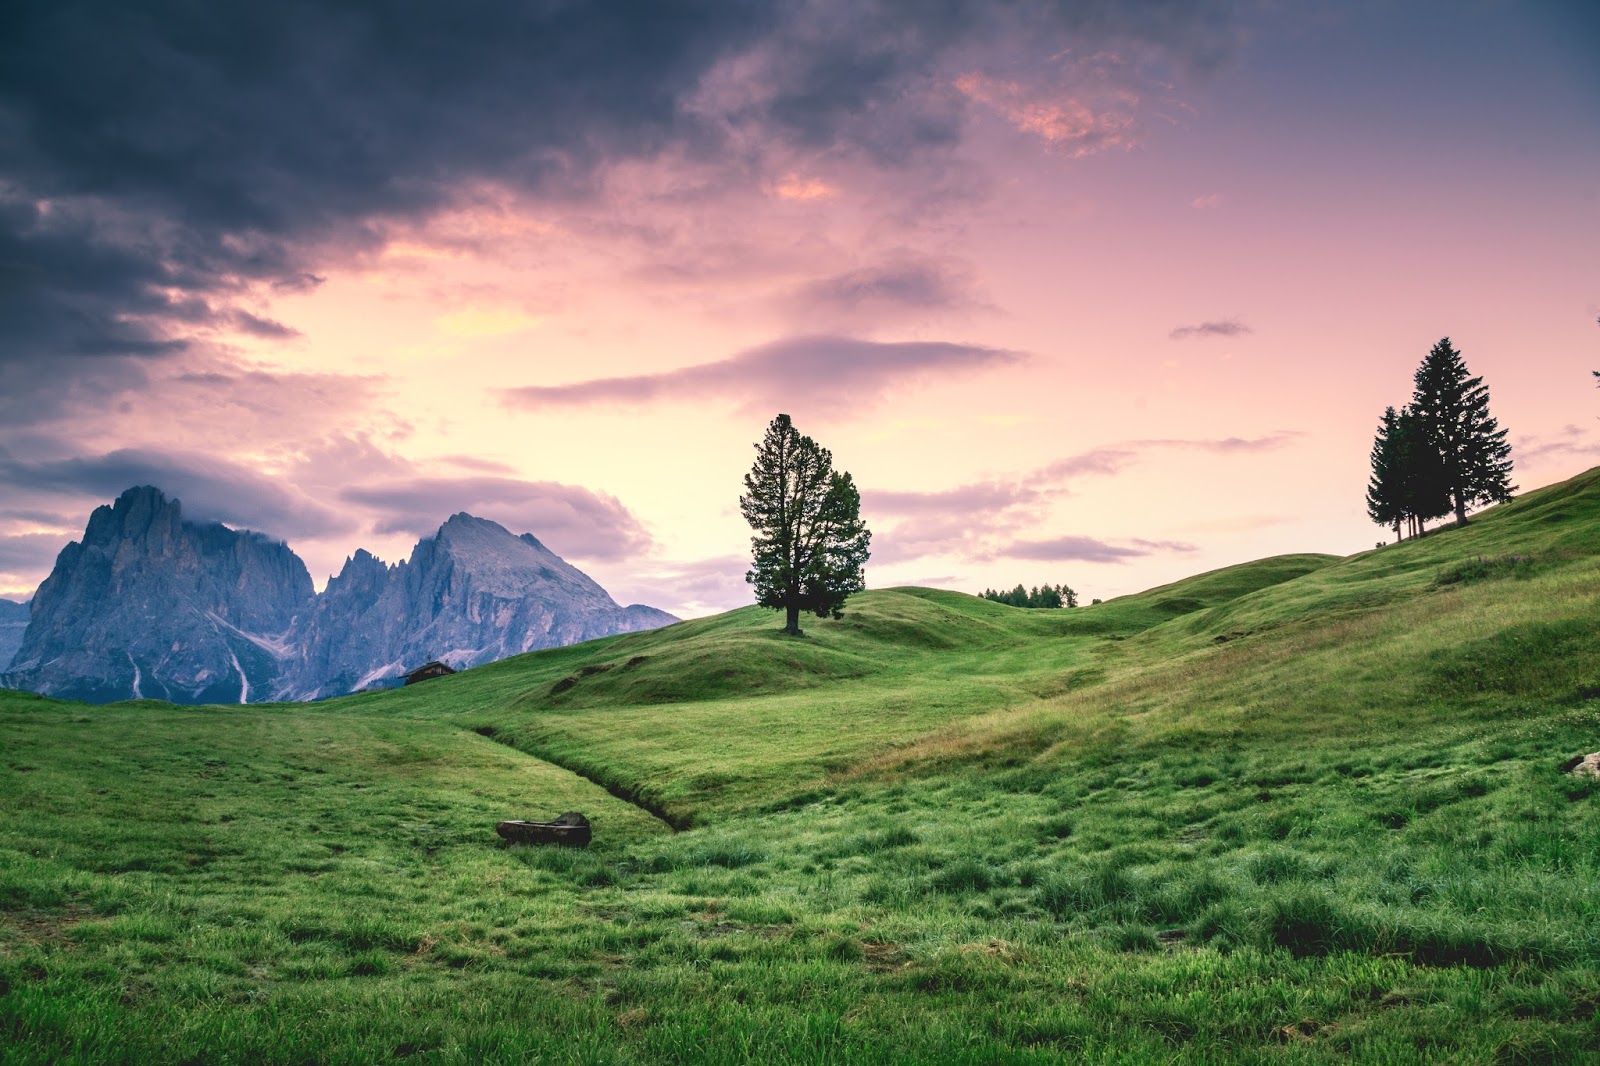 Green Grass, Rocks and Beautiful Sky Photography